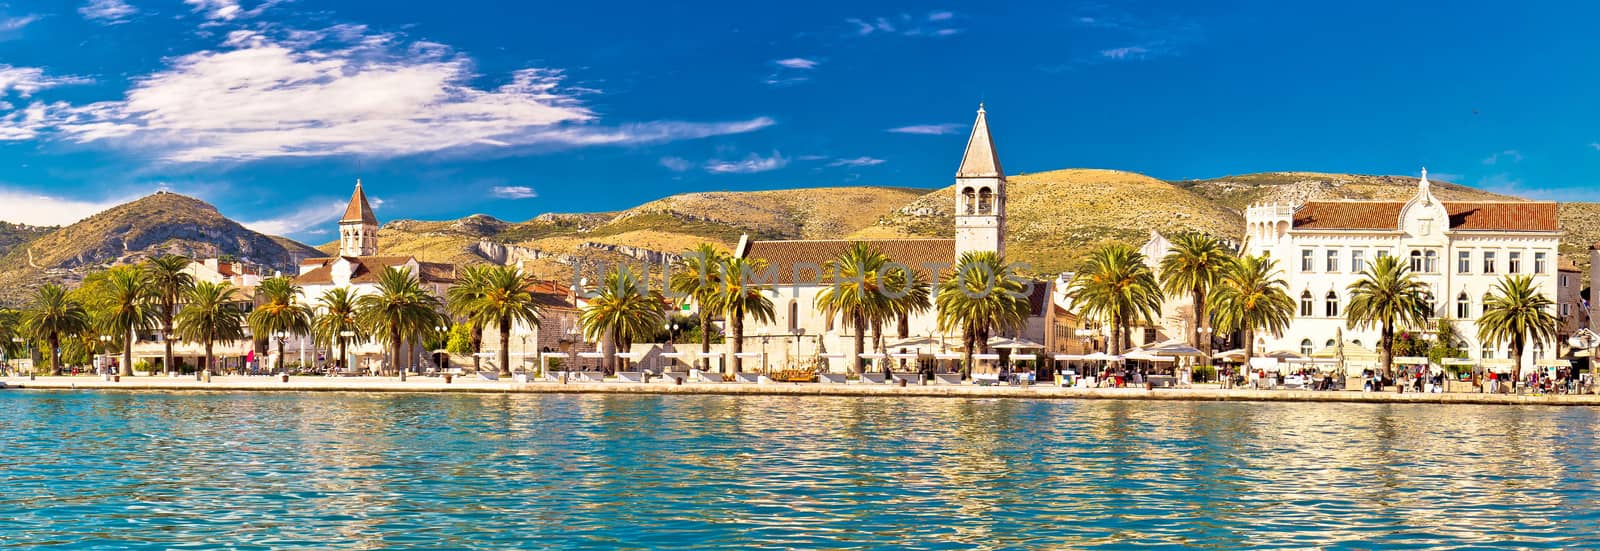 Trogir UNESCO world heritage site panoramic view in Dalmatia, Croatia